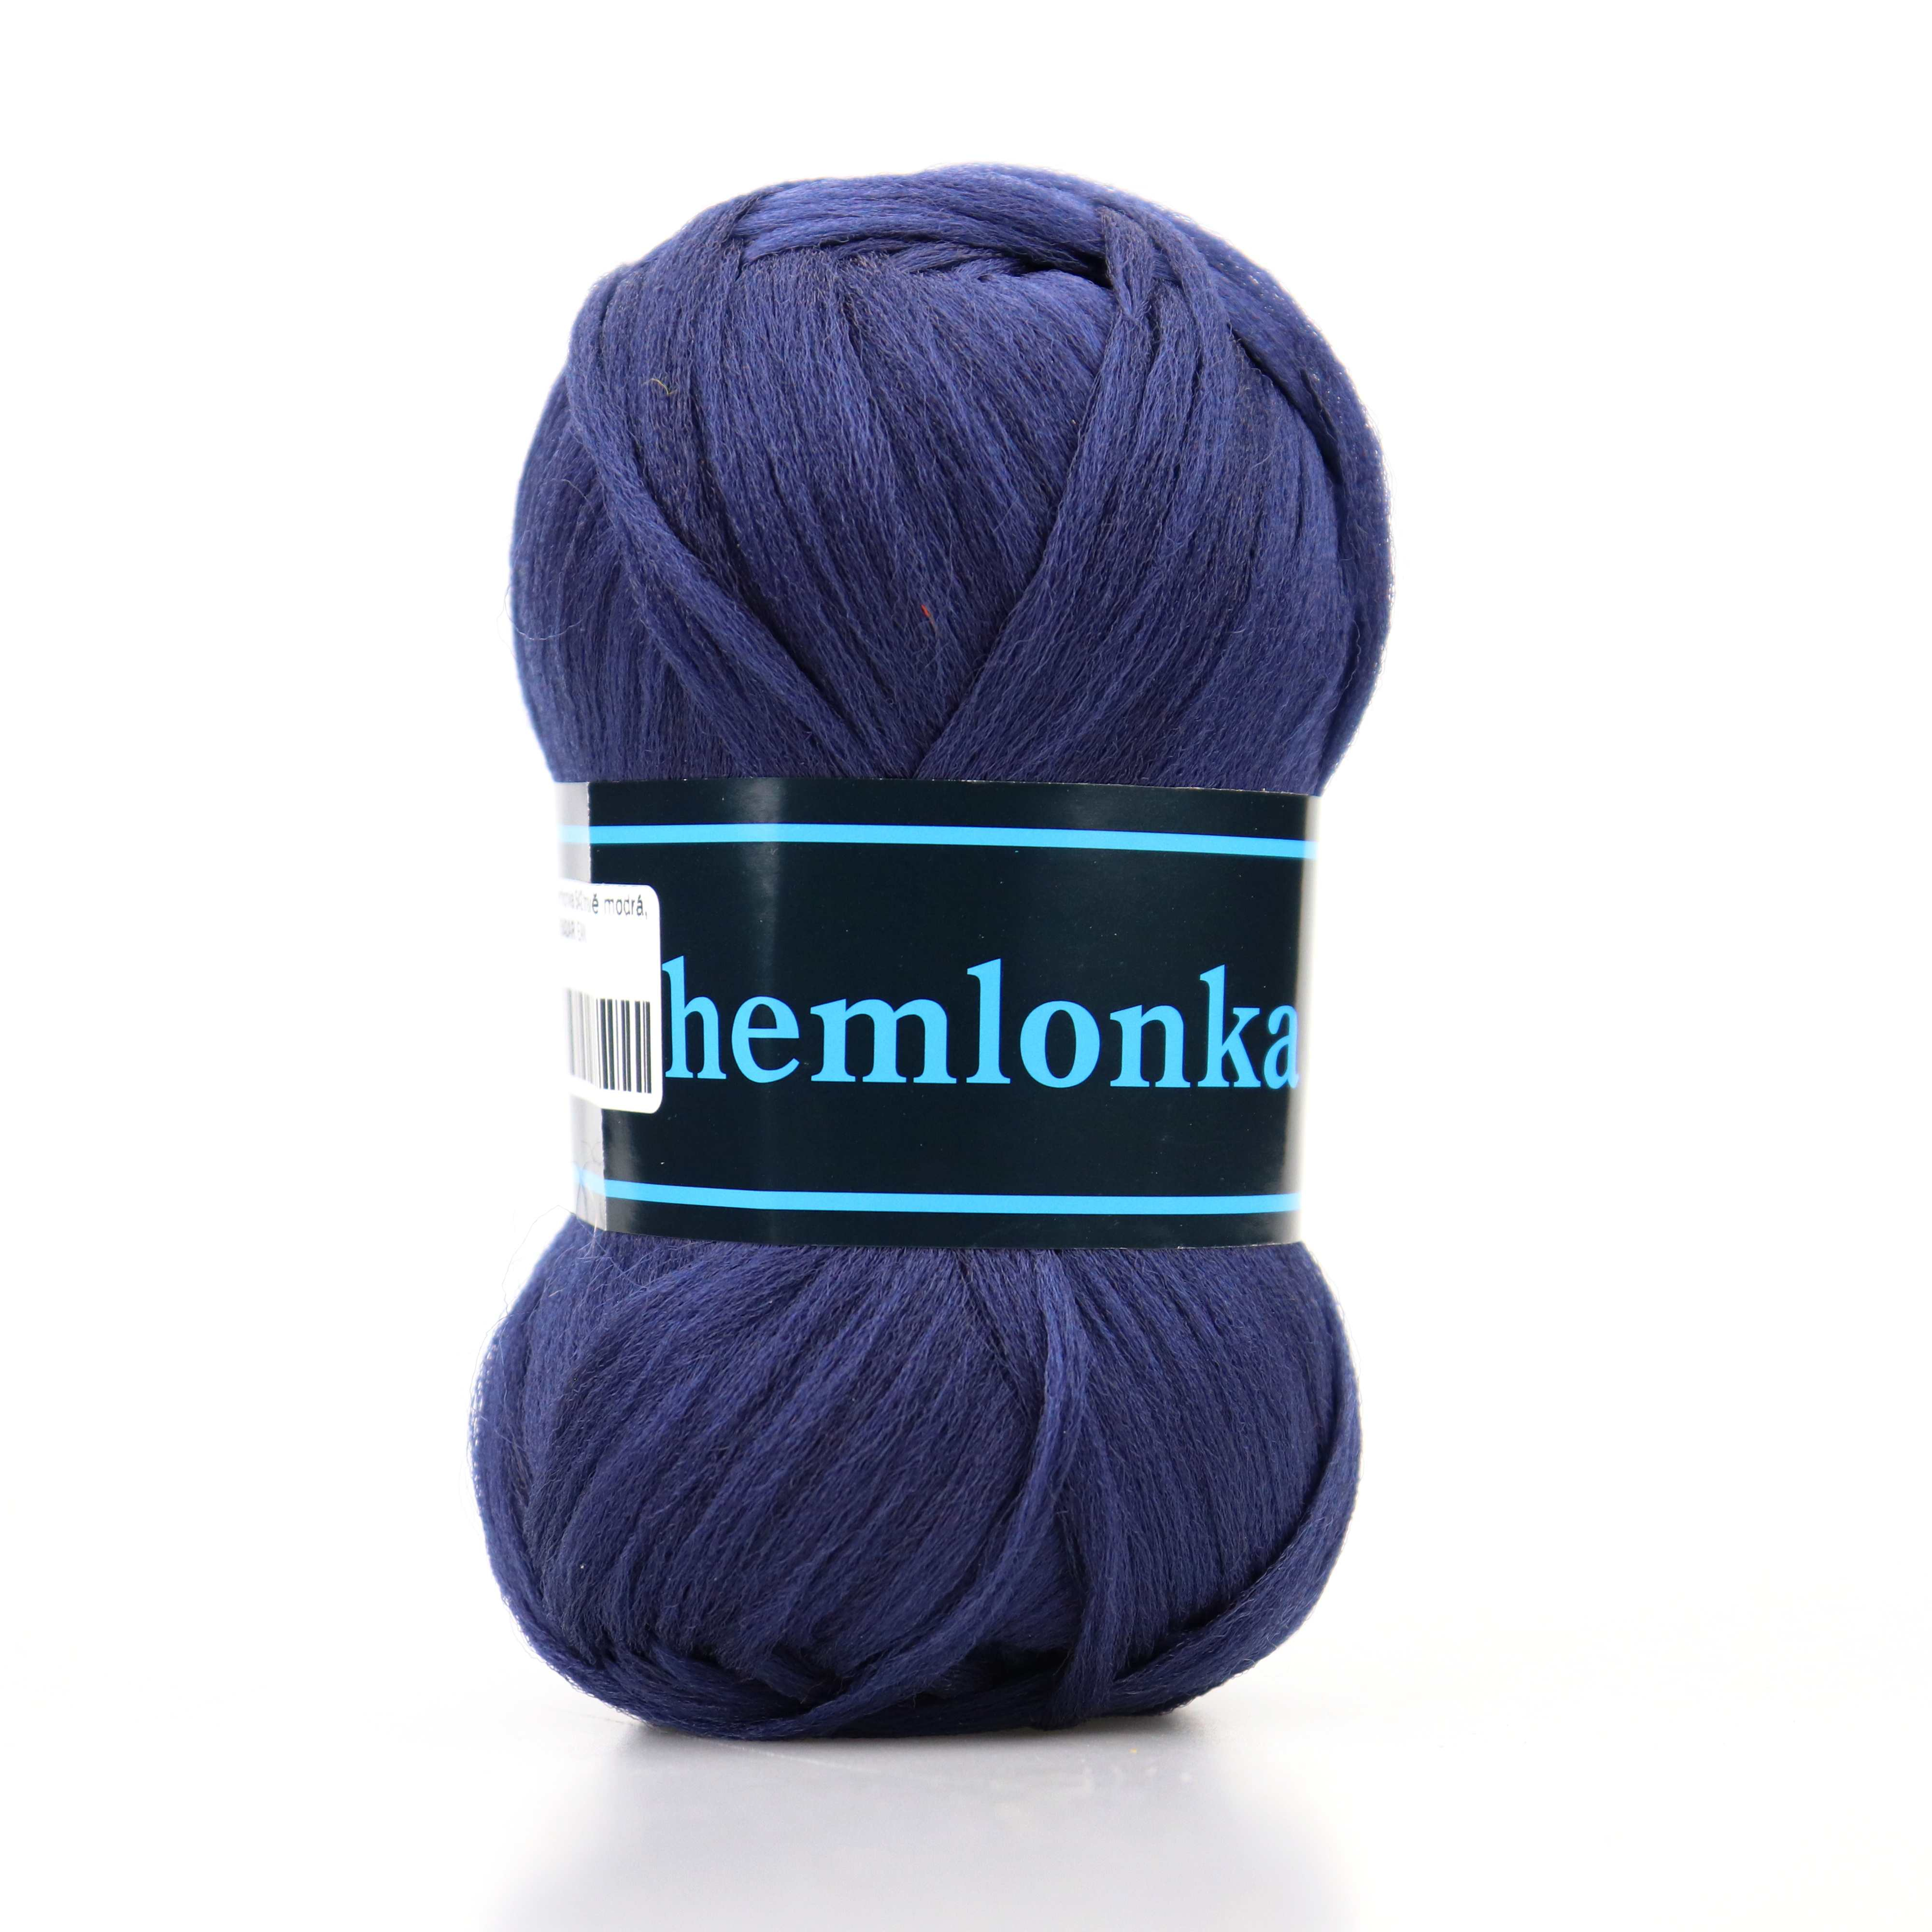 Ariadne yarn Chemlonka 542 dark blue